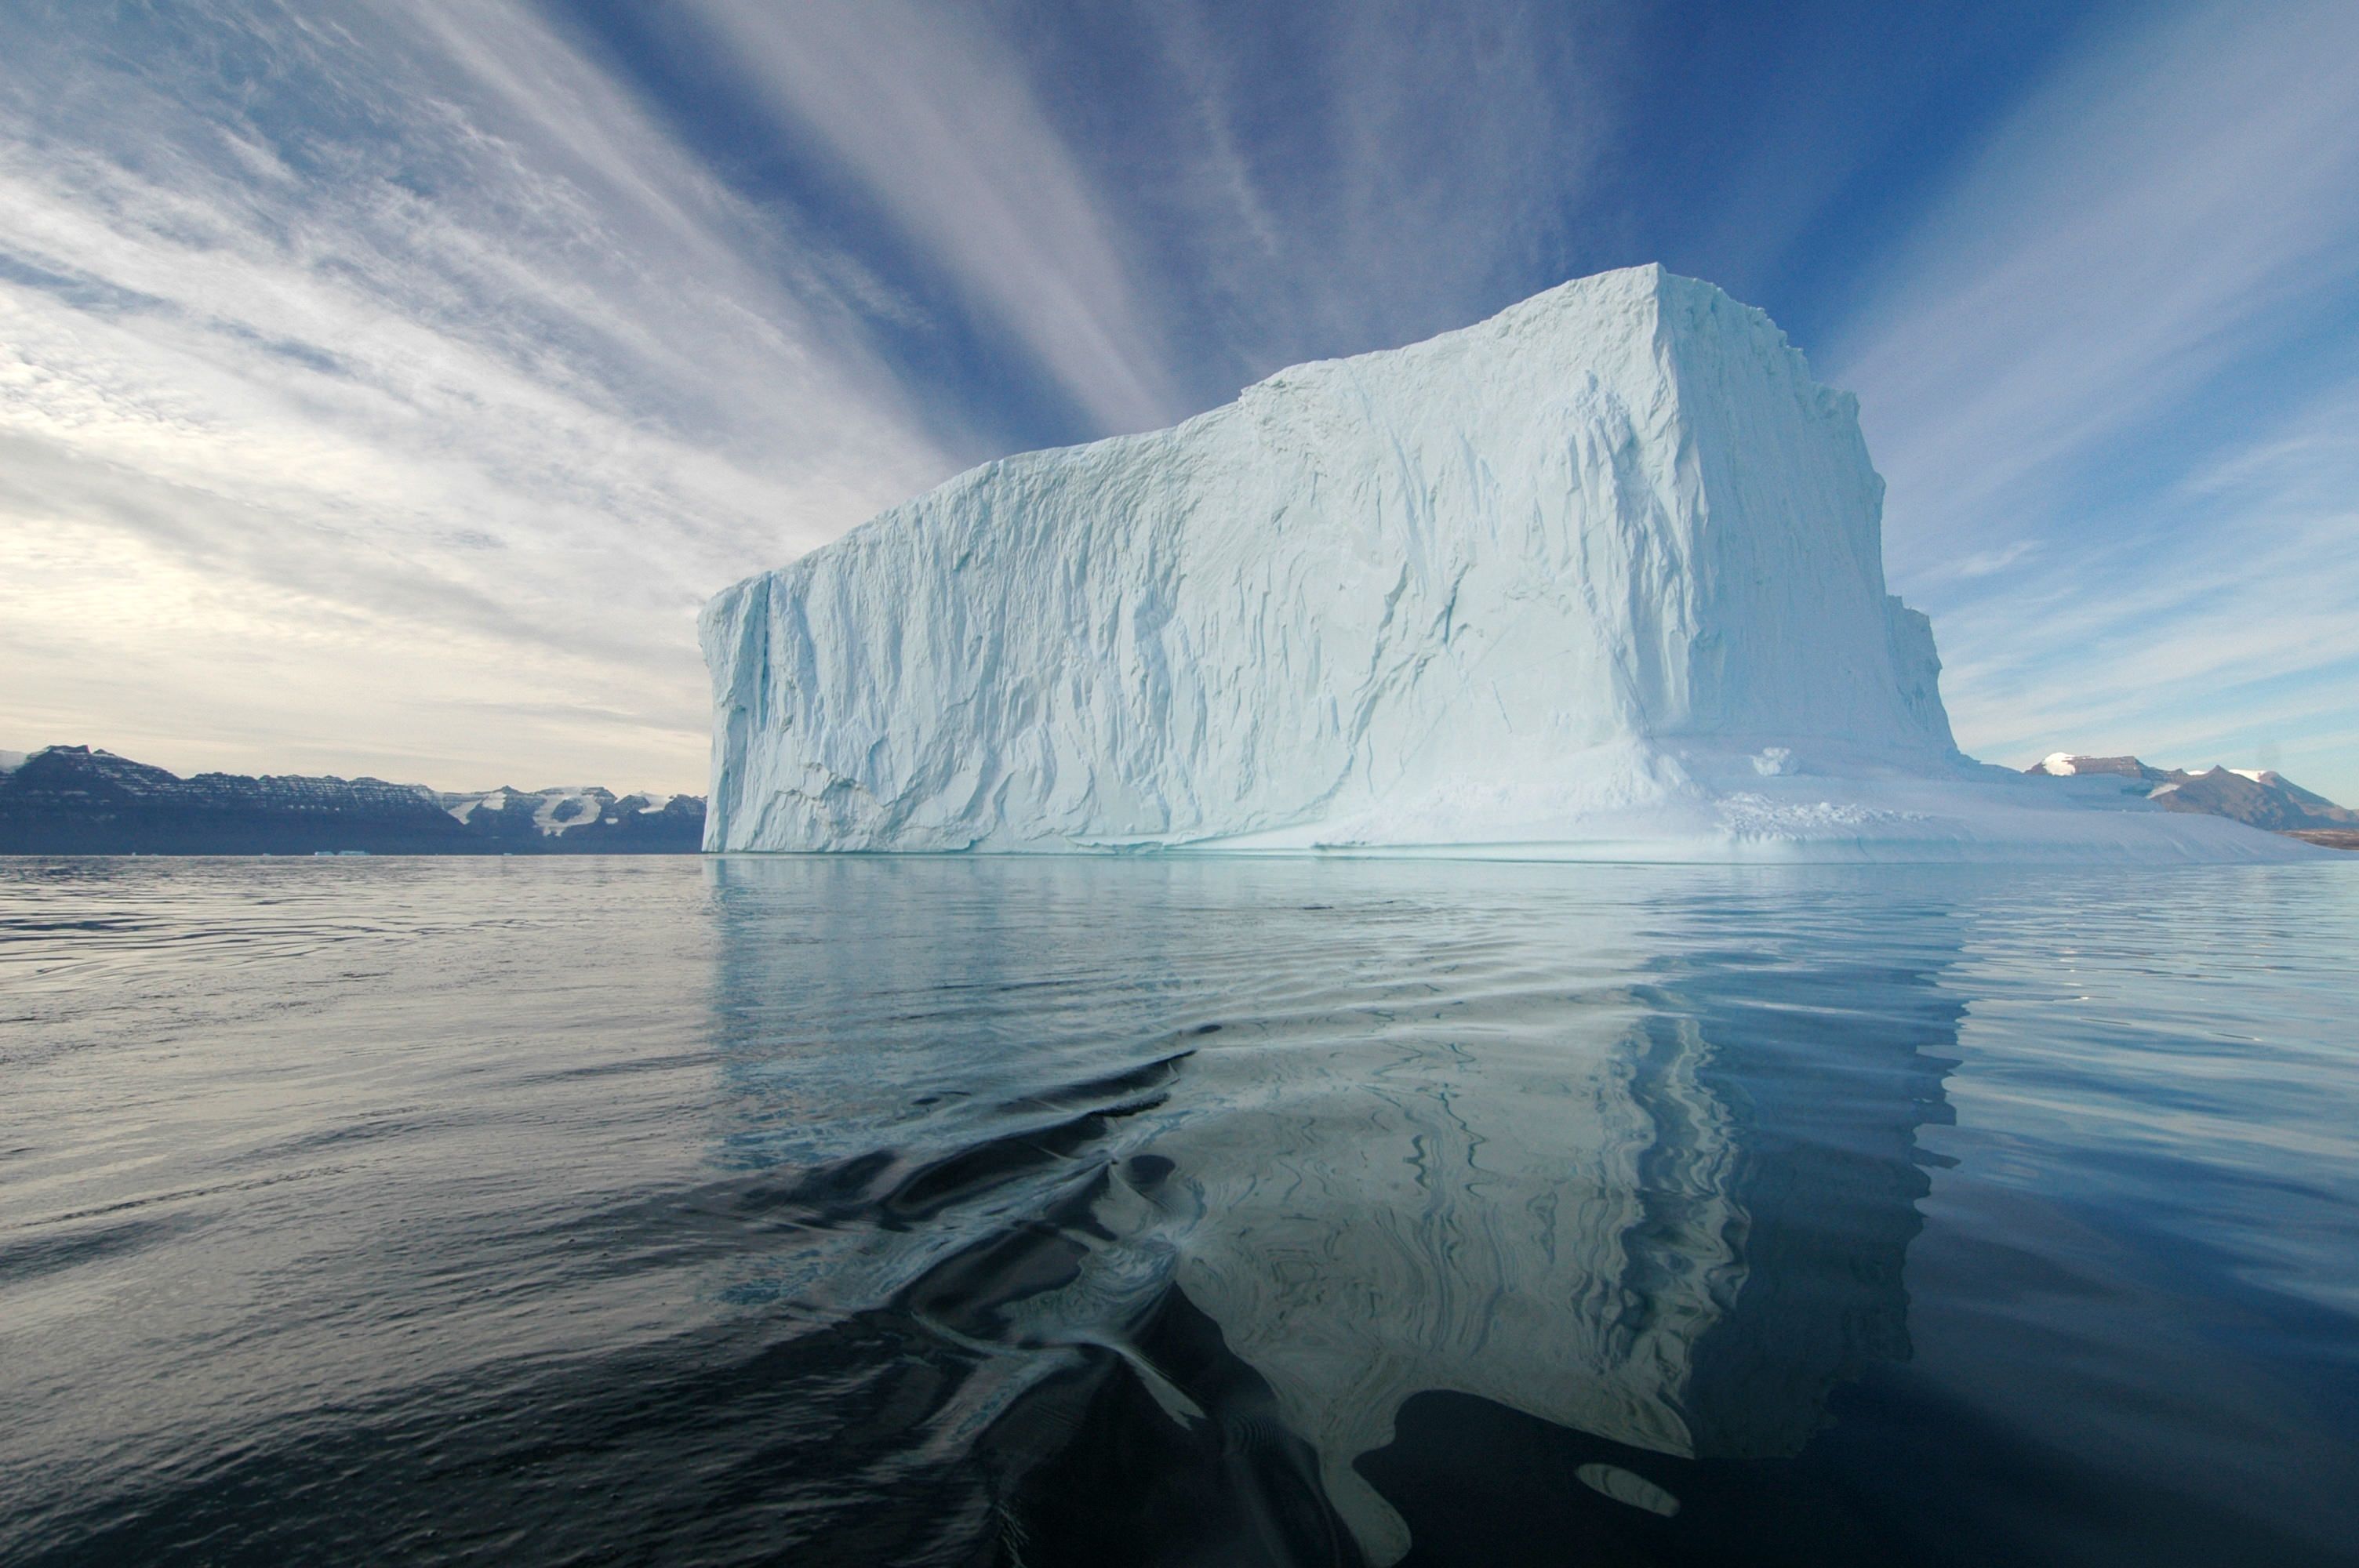 Majestic Ice Berg | Pics | Pinterest